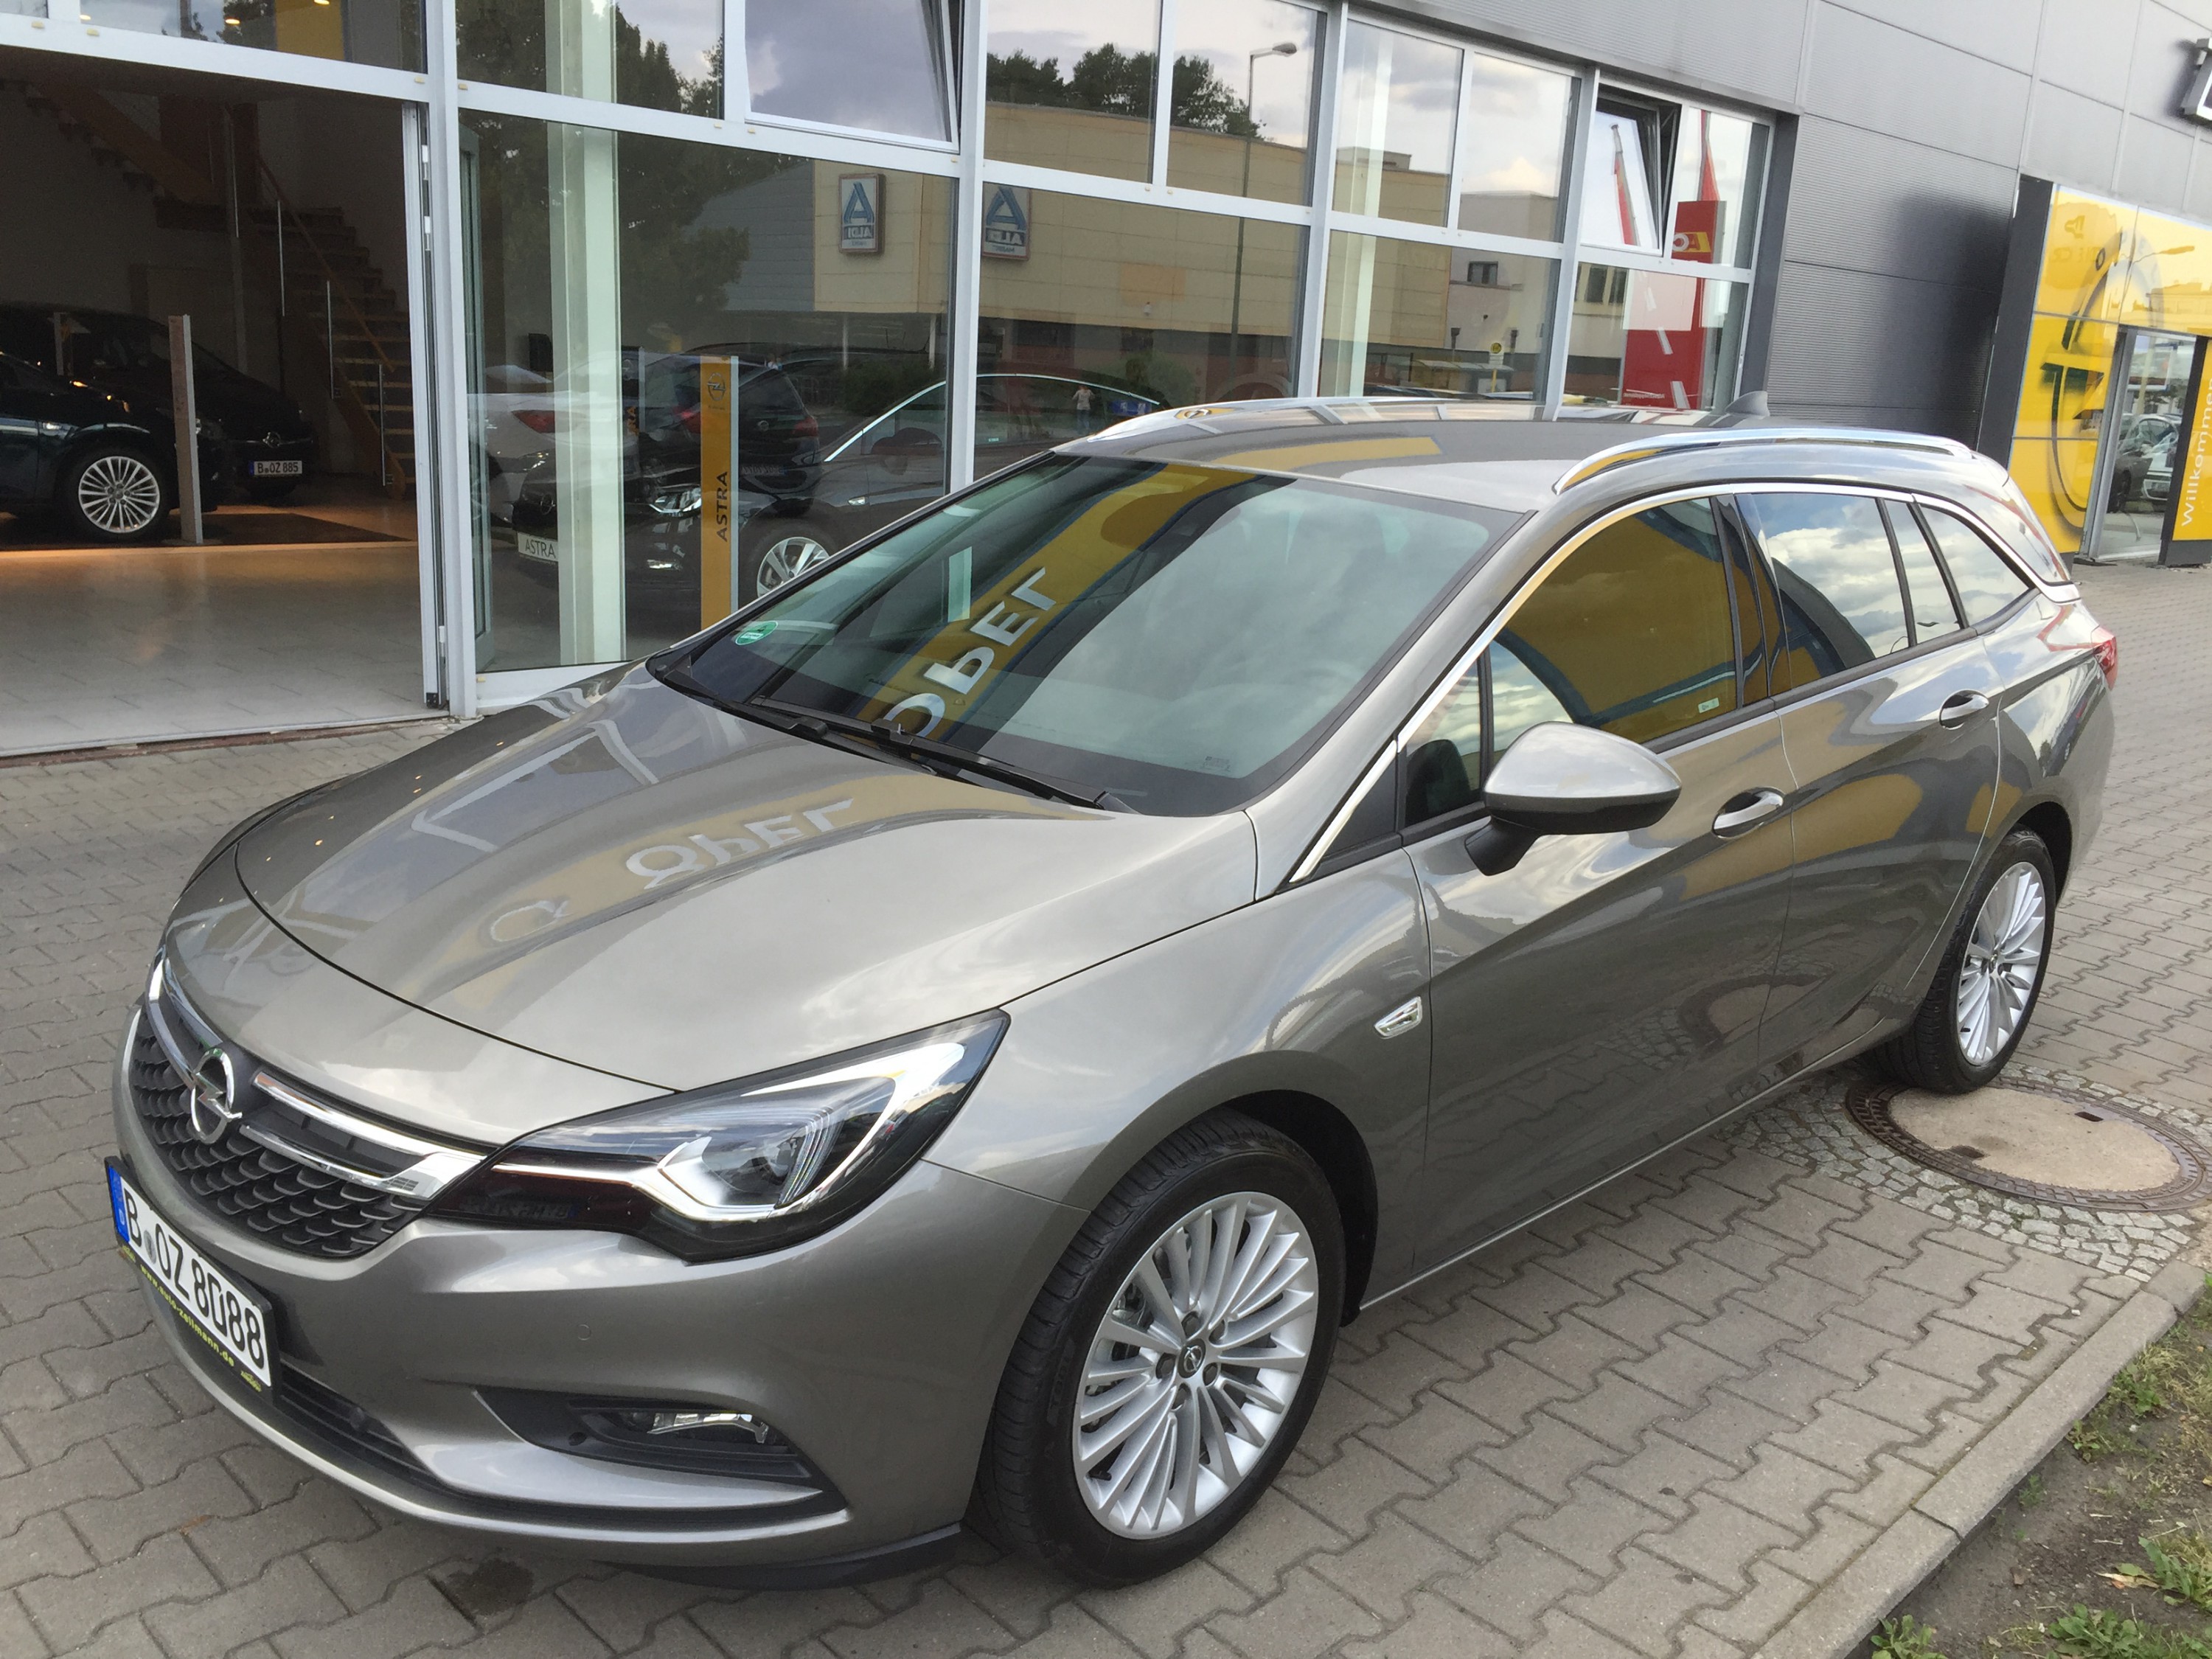 Opel Astra Sports Tourer interior 2019